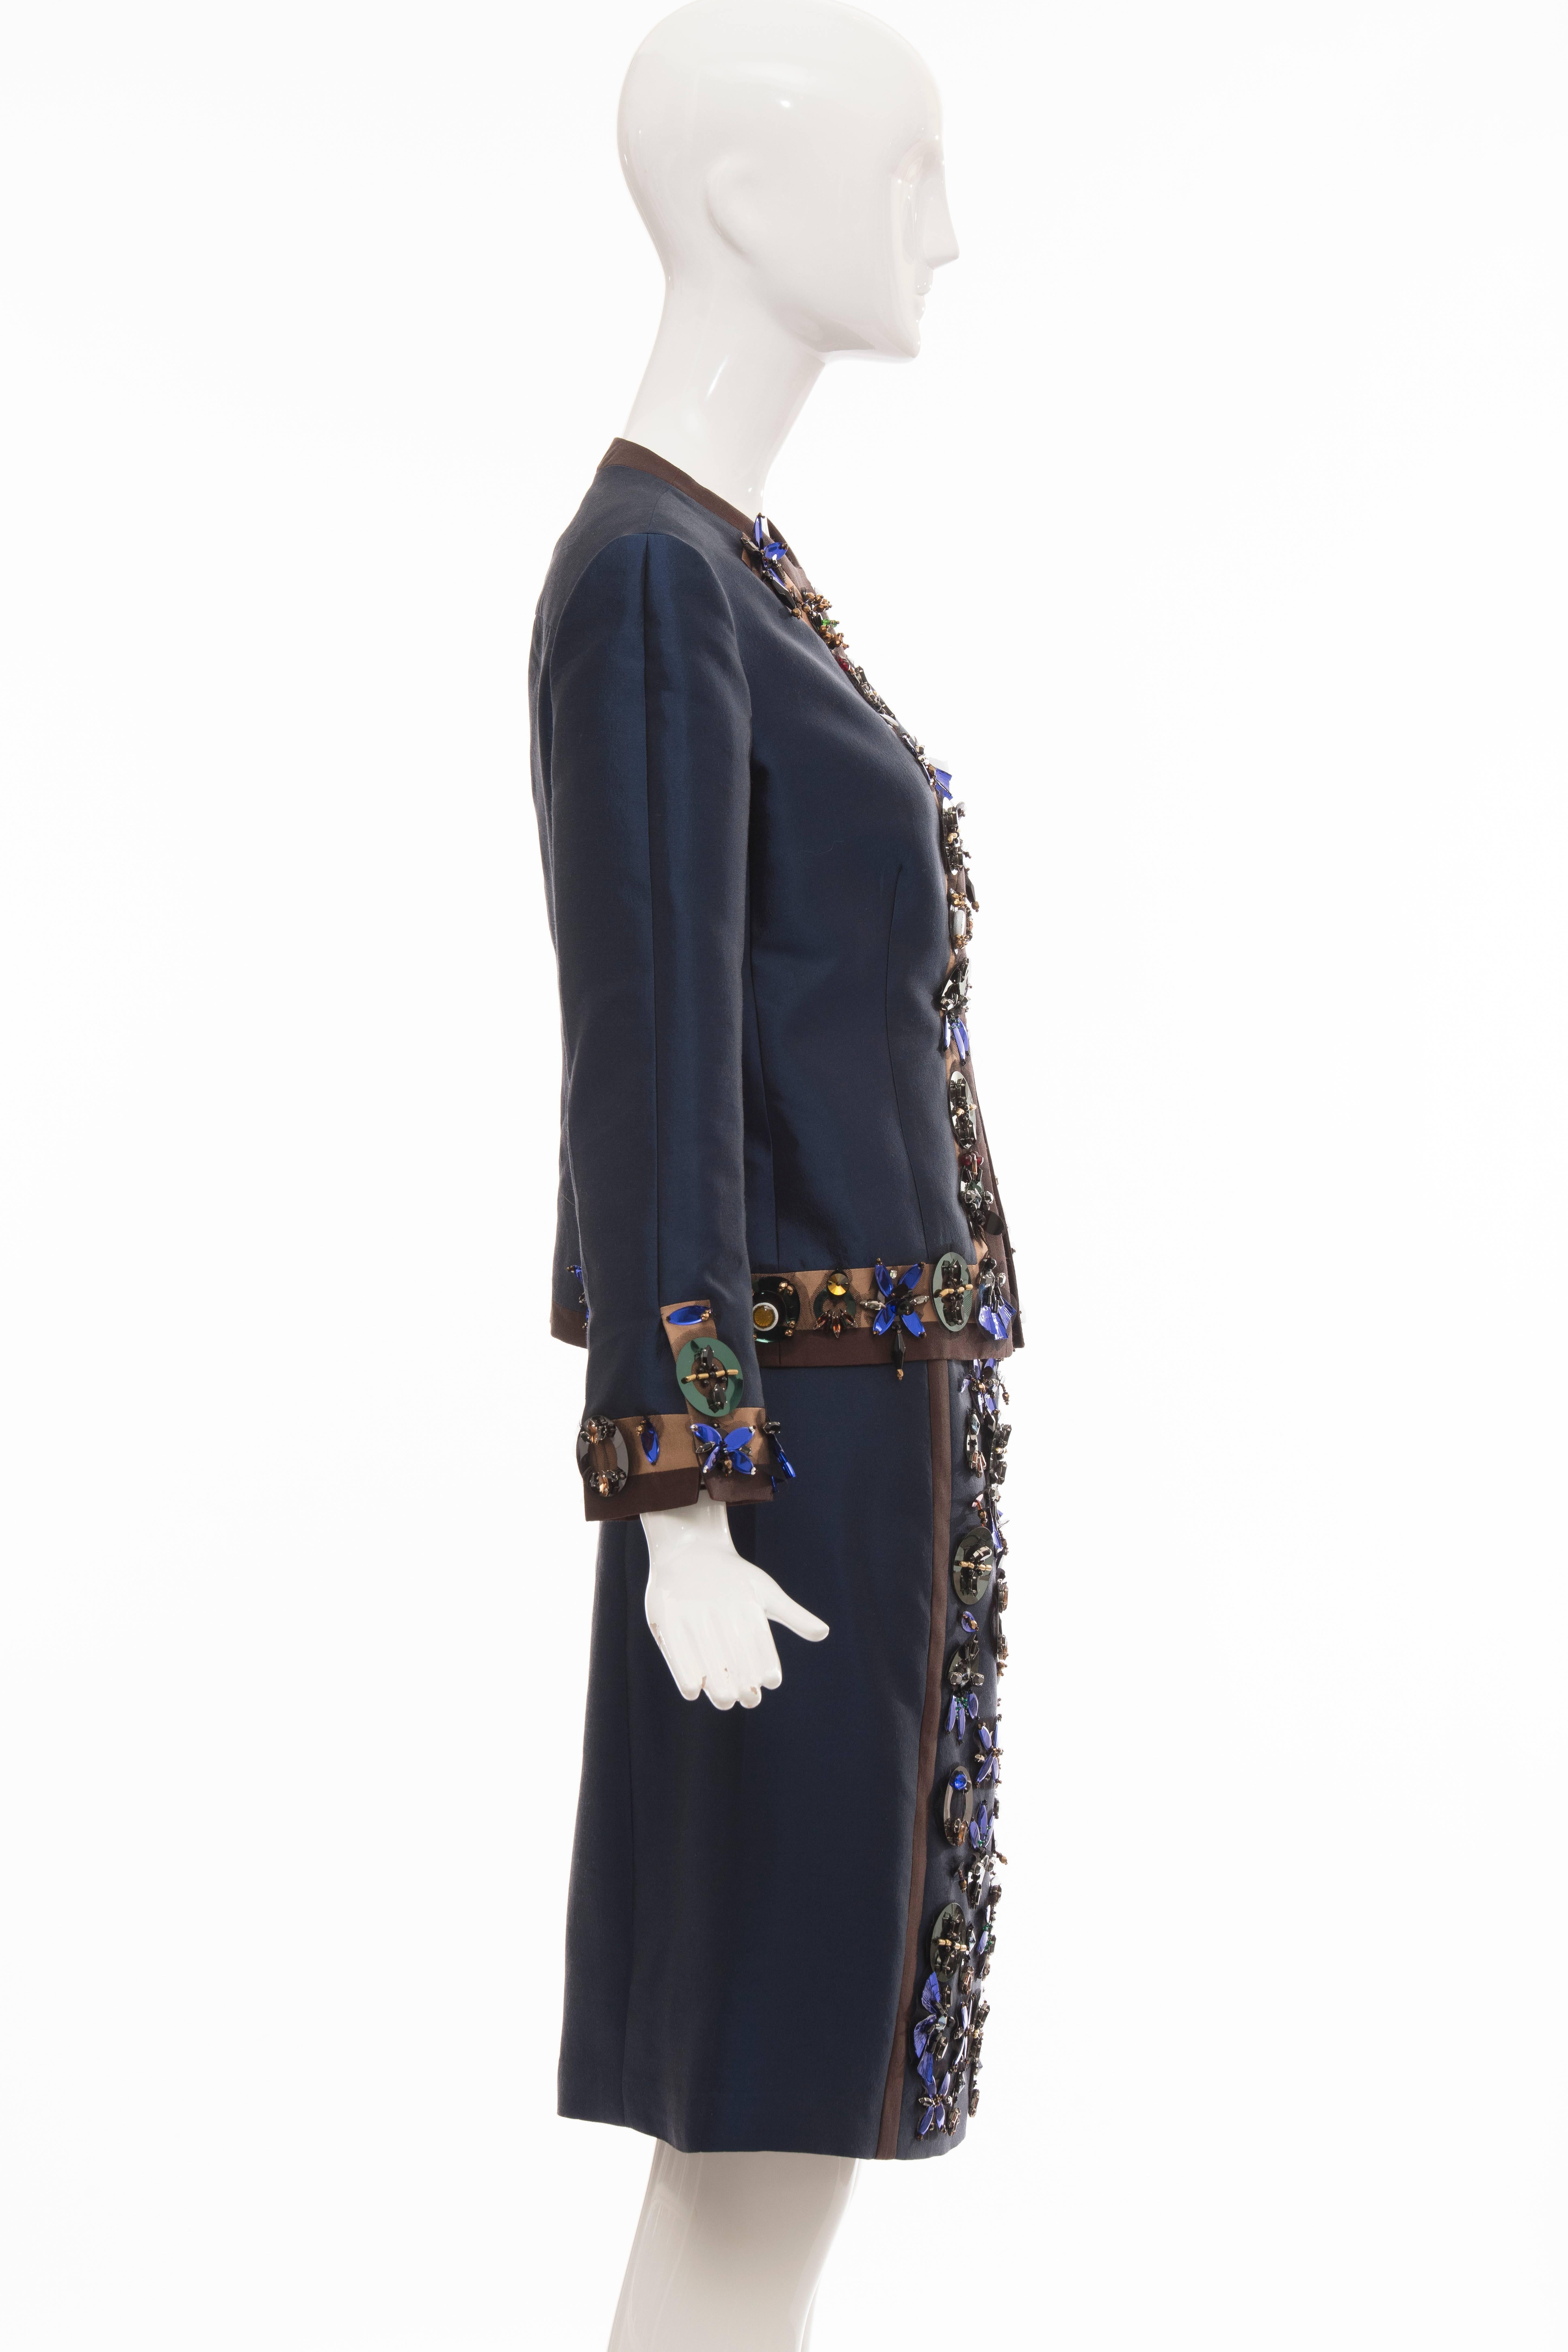 Prada Runway Wool Silk Embroidered Skirt-Suit, Spring 2005 For Sale 2